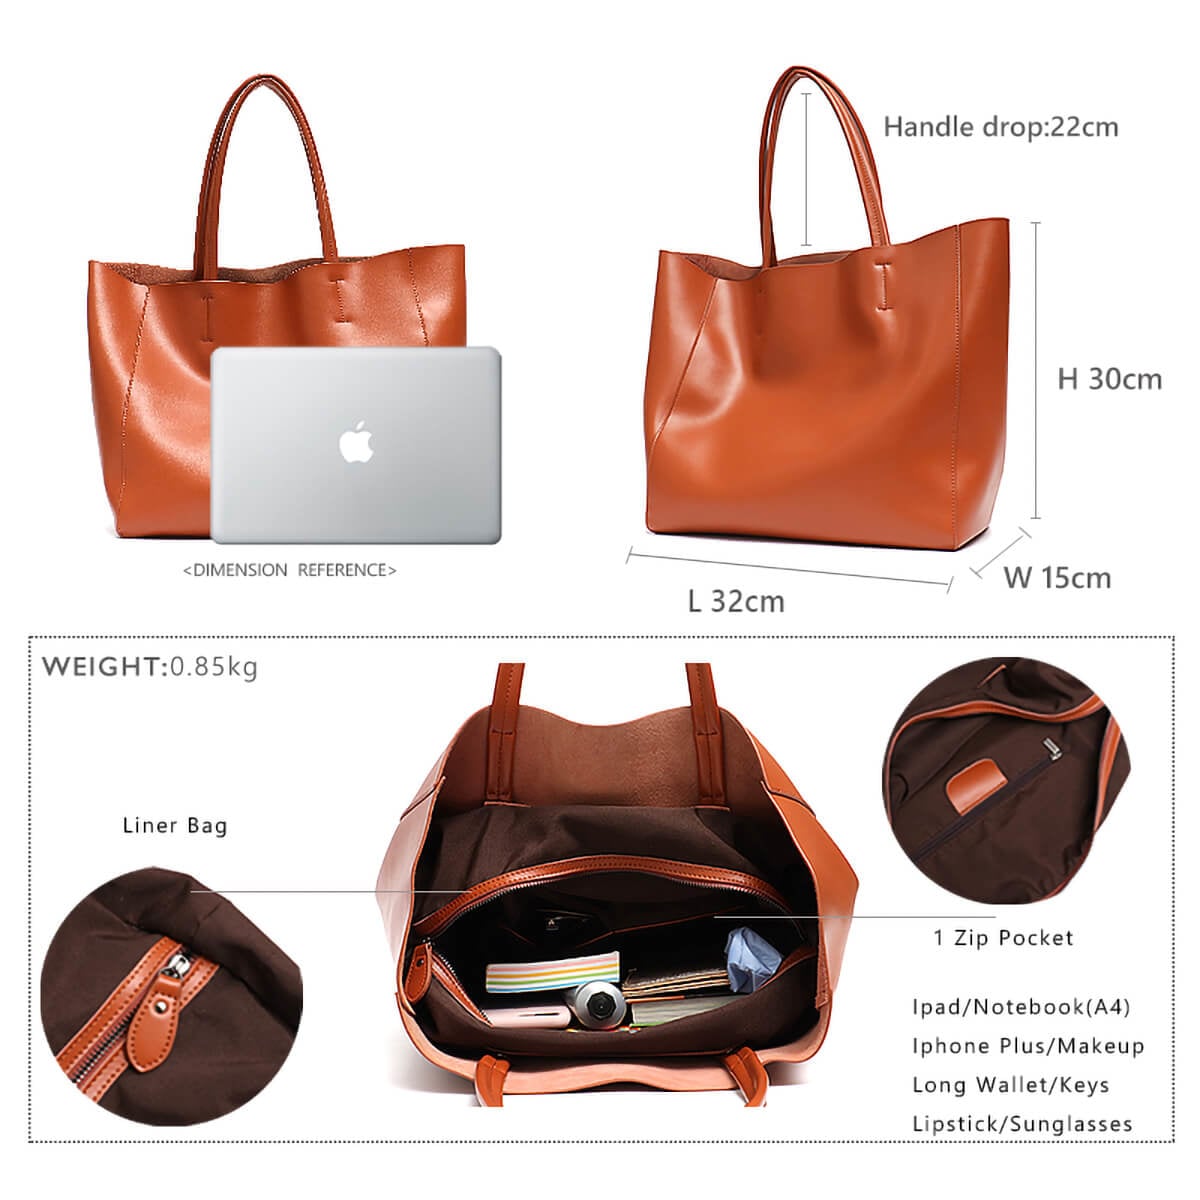 Luxury Leather Tote Bag - Women's Designer Fashion